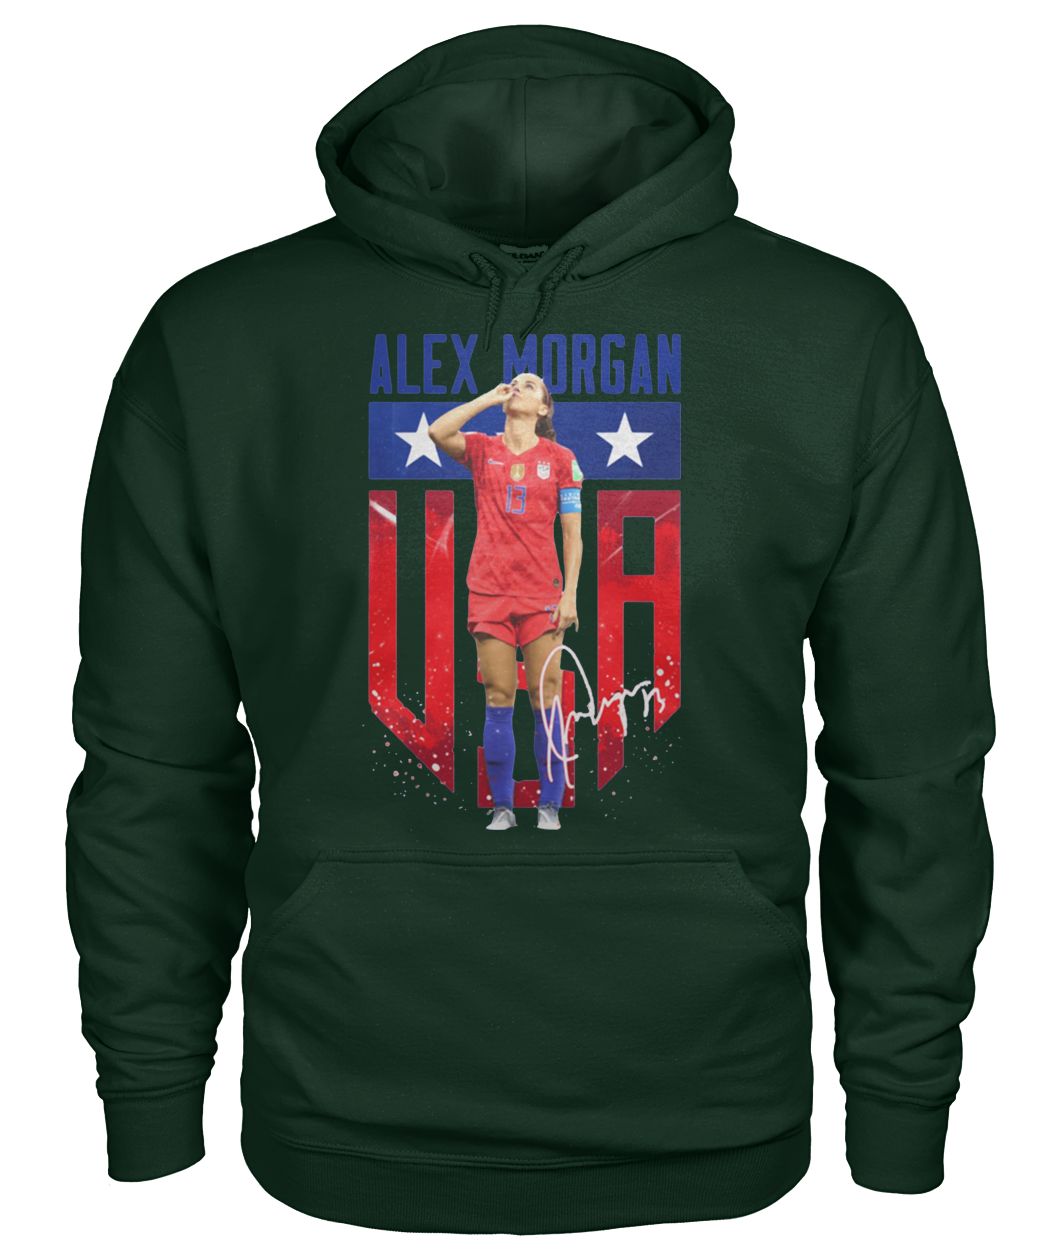 Alex morgan US women’s world cup trolling england iconic celebration gildan hoodie